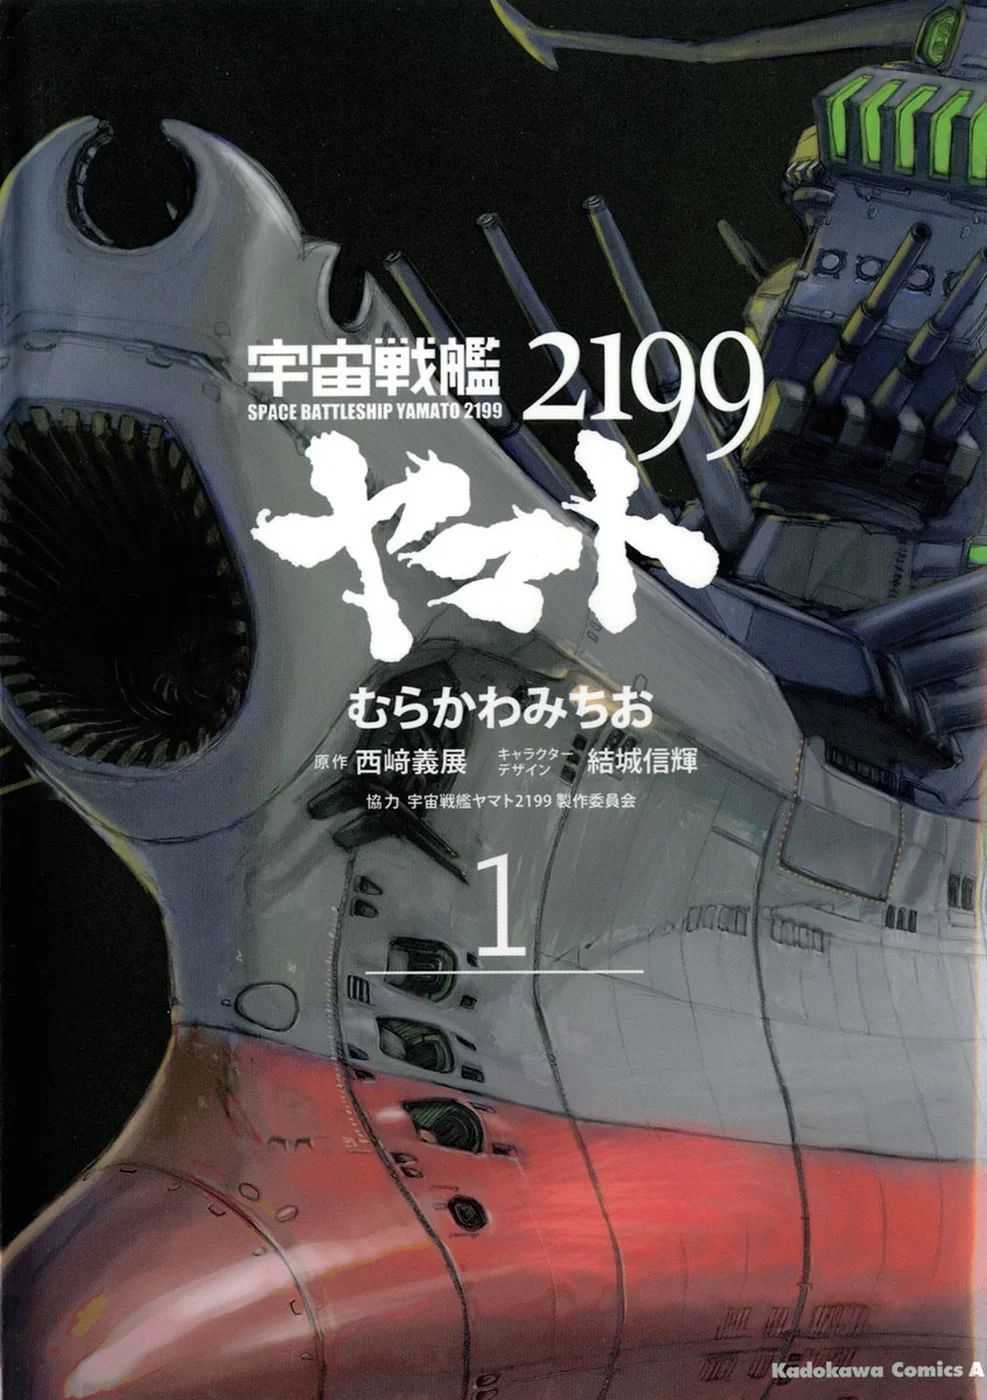 Star Blazers: Space Battleship Yamato 2199